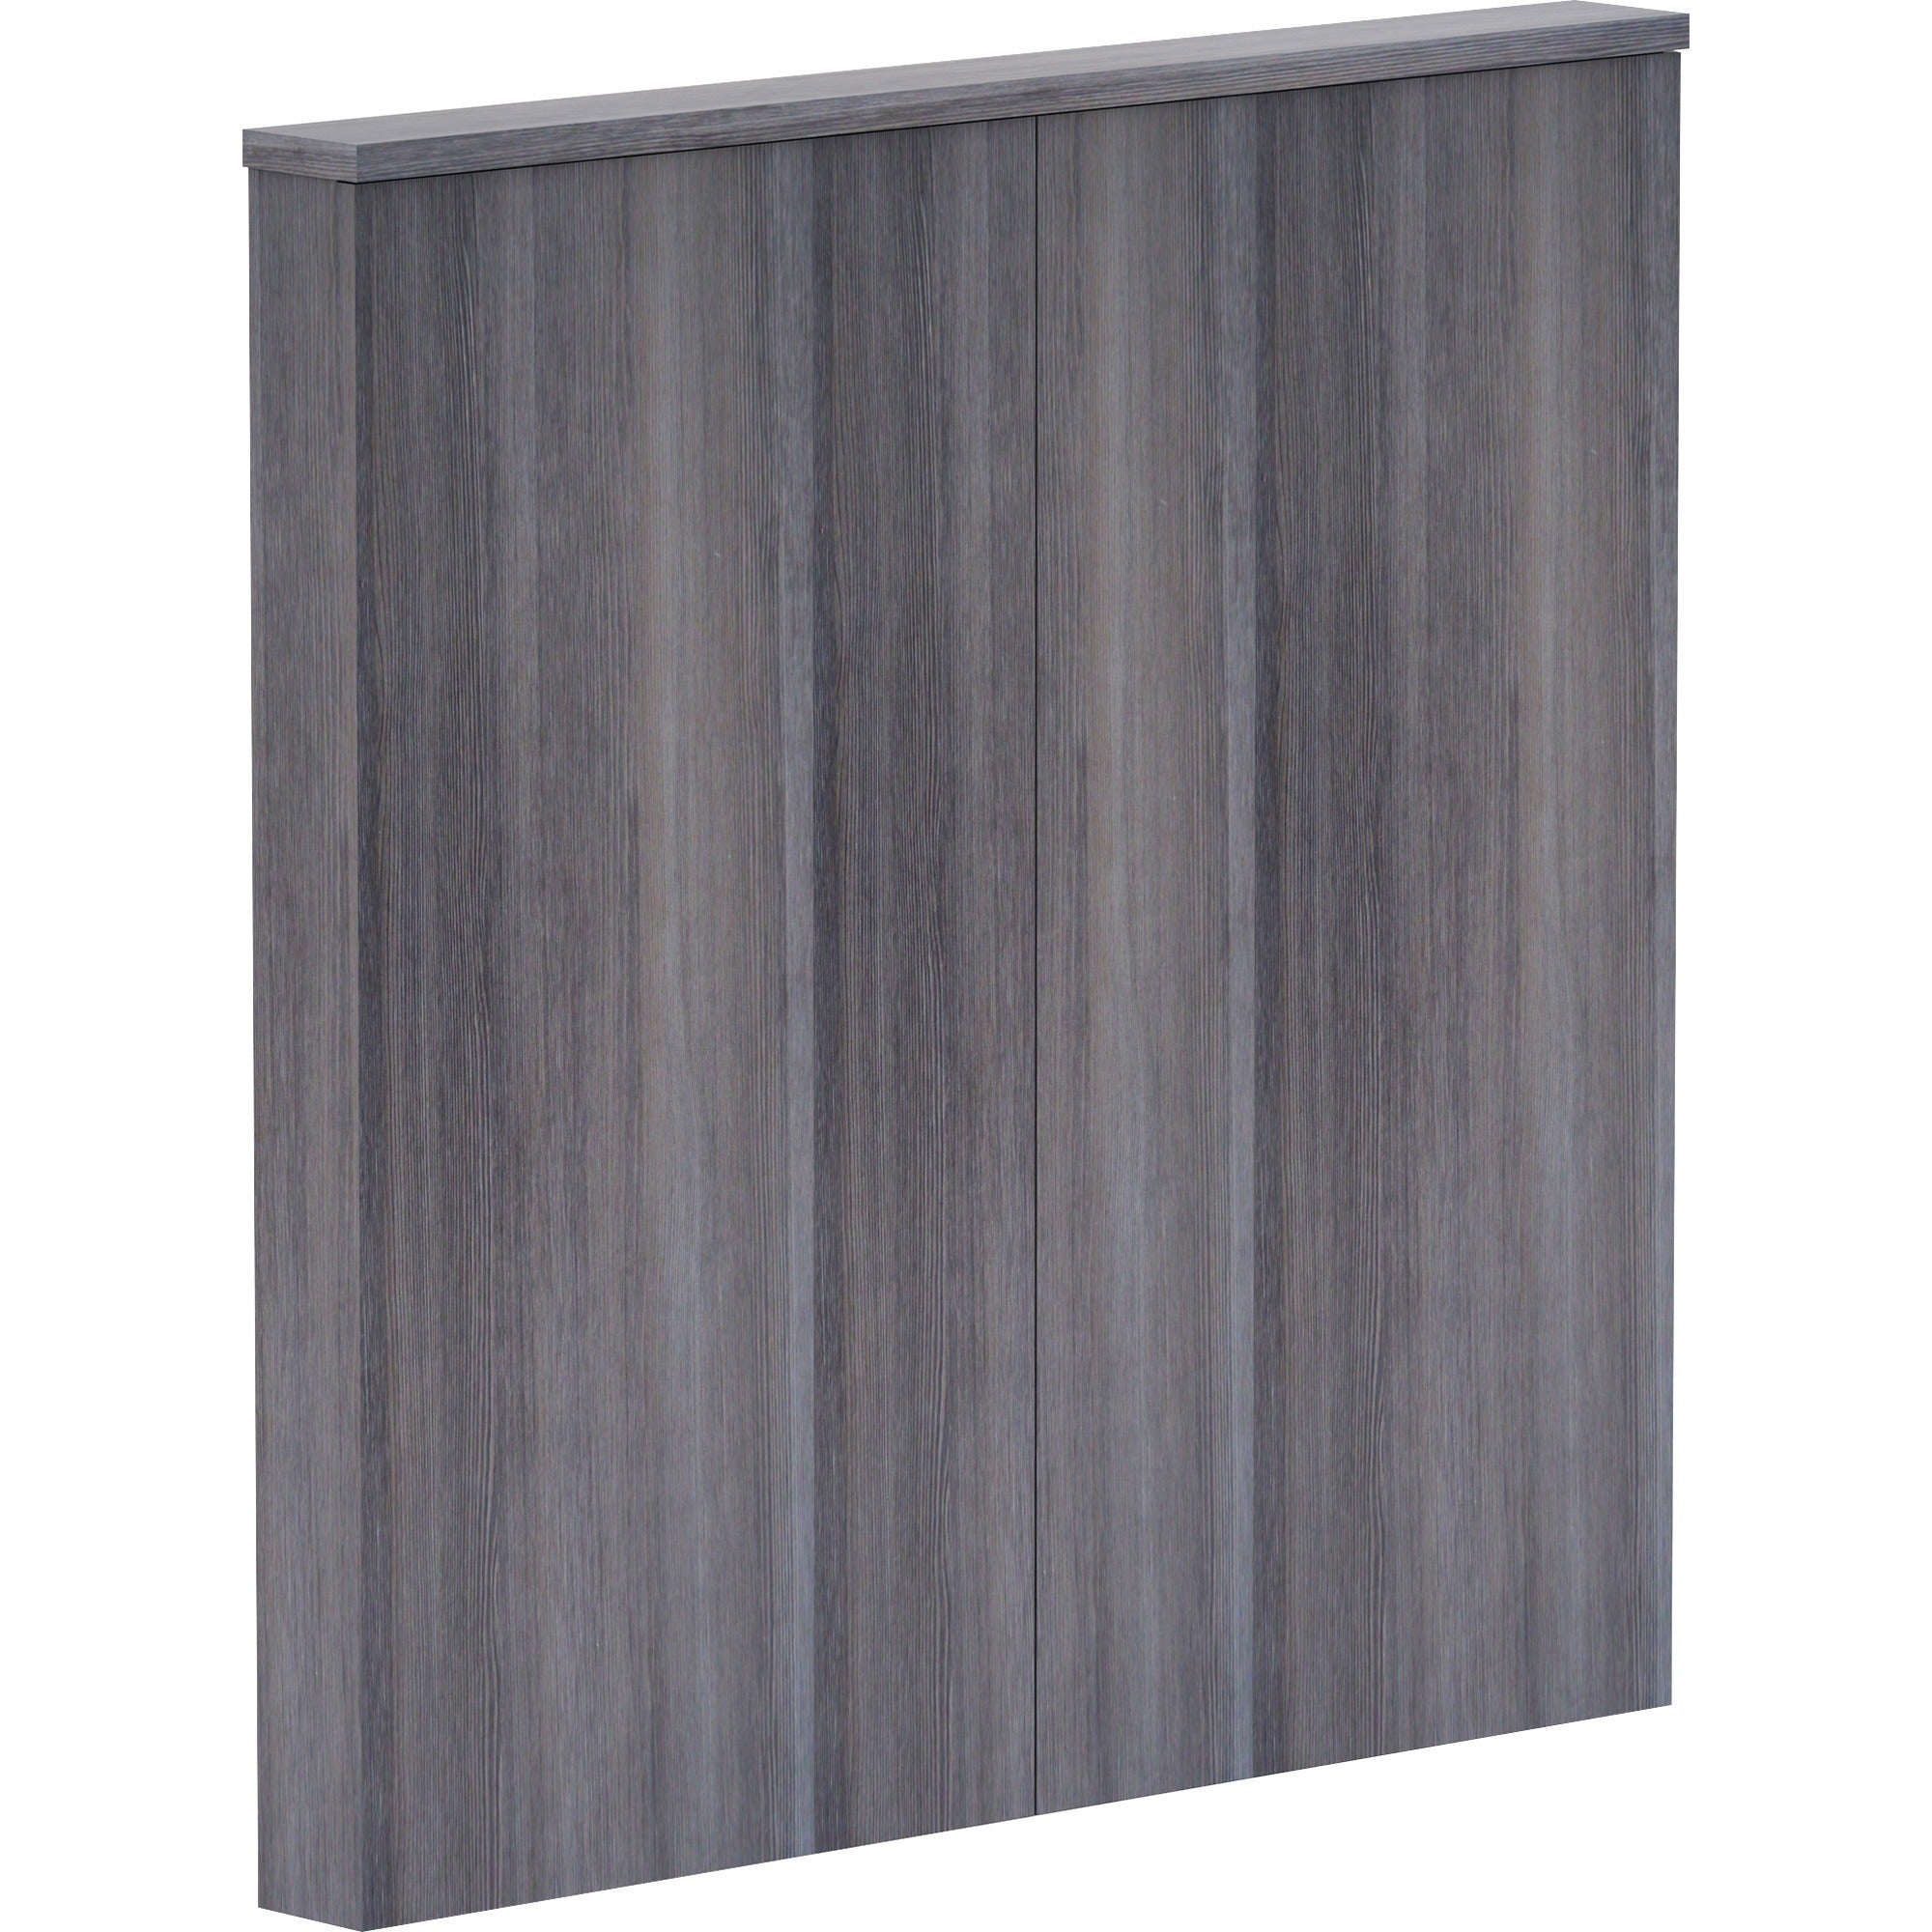 lorell-dry-erase-whiteboard-presentation-cabinet-hinged-door-dry-erase-surface-1-each-473-x-473-x-48_llr69625 - 3